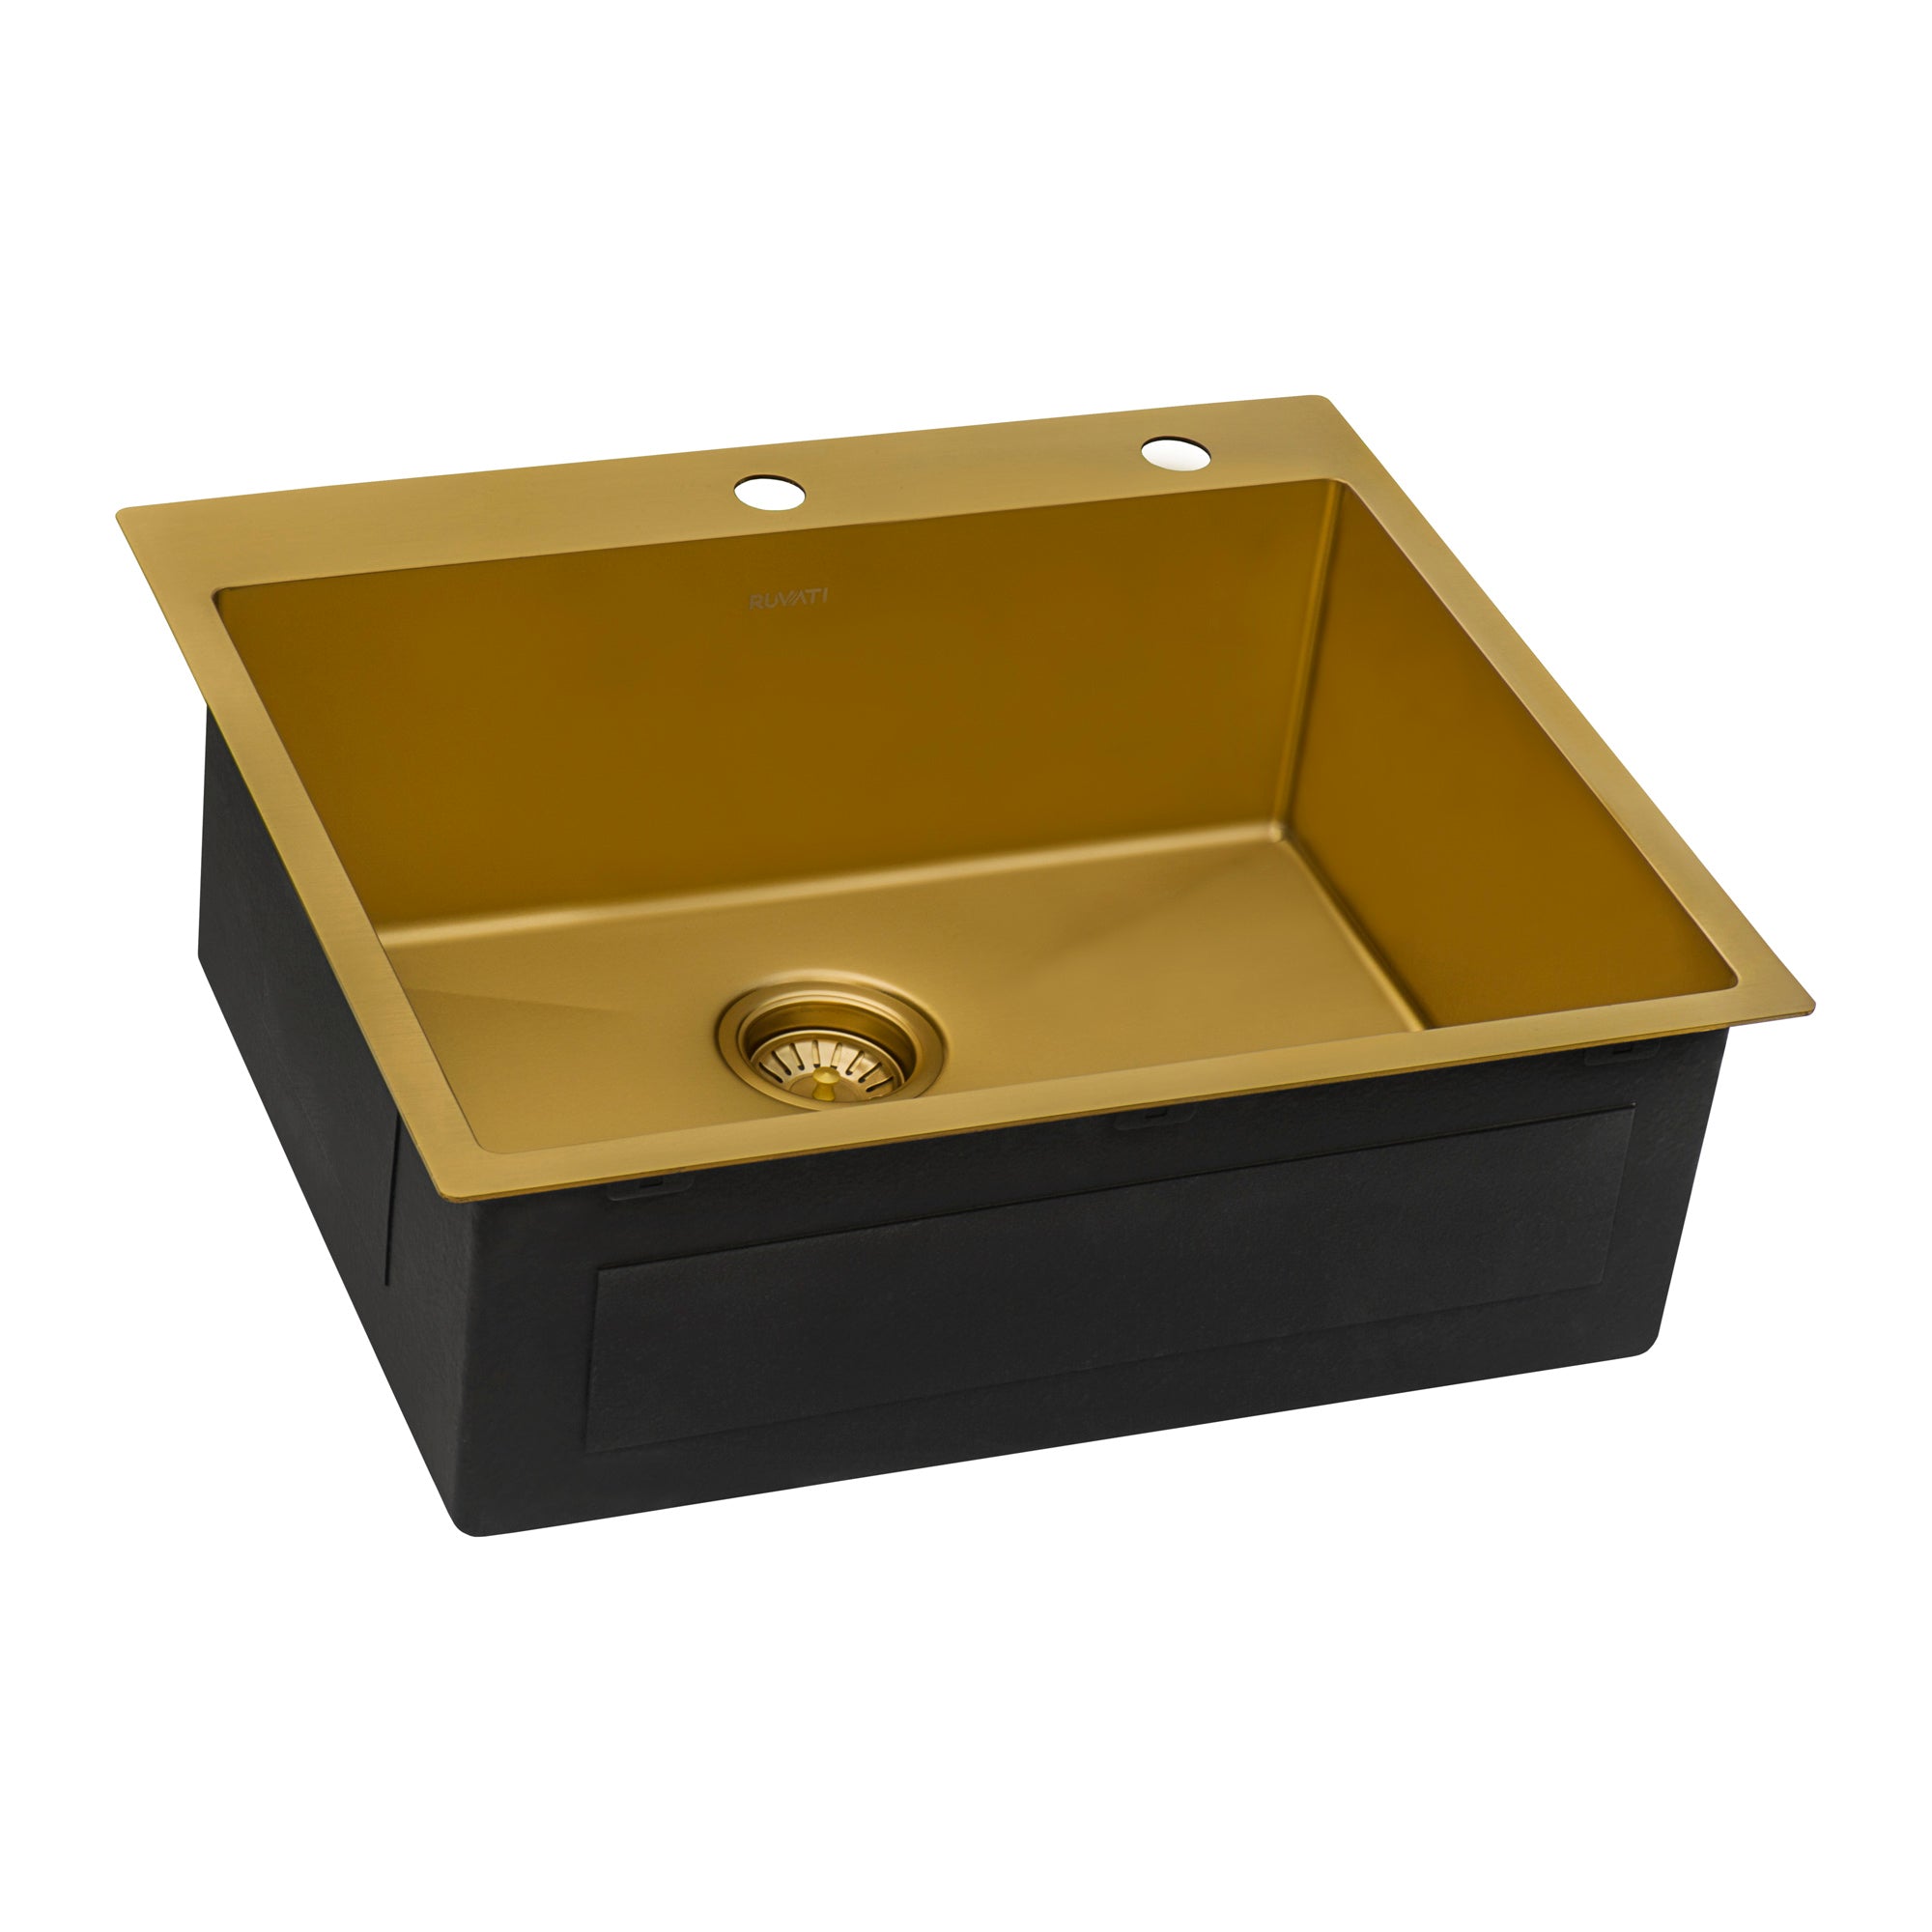 Ruvati 25 inch Polished Brass Matte Gold Workstation Drop-in Topmount Kitchen Sink Single Bowl – RVH5007GG